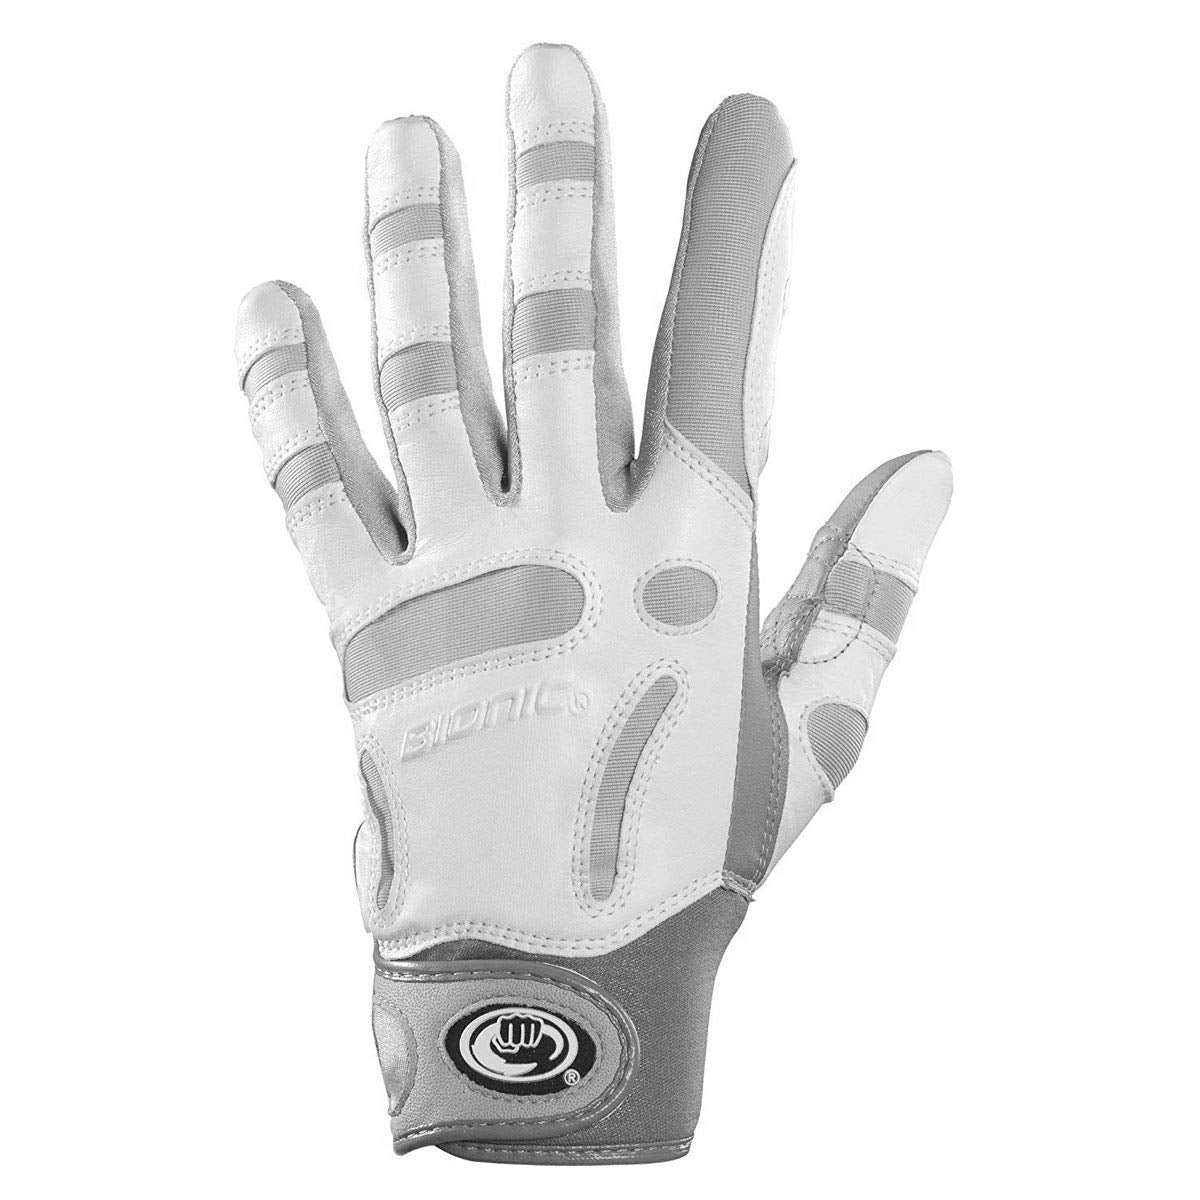 Bionic Women's ReliefGrip Golf Glove (X-Large, Left Hand)